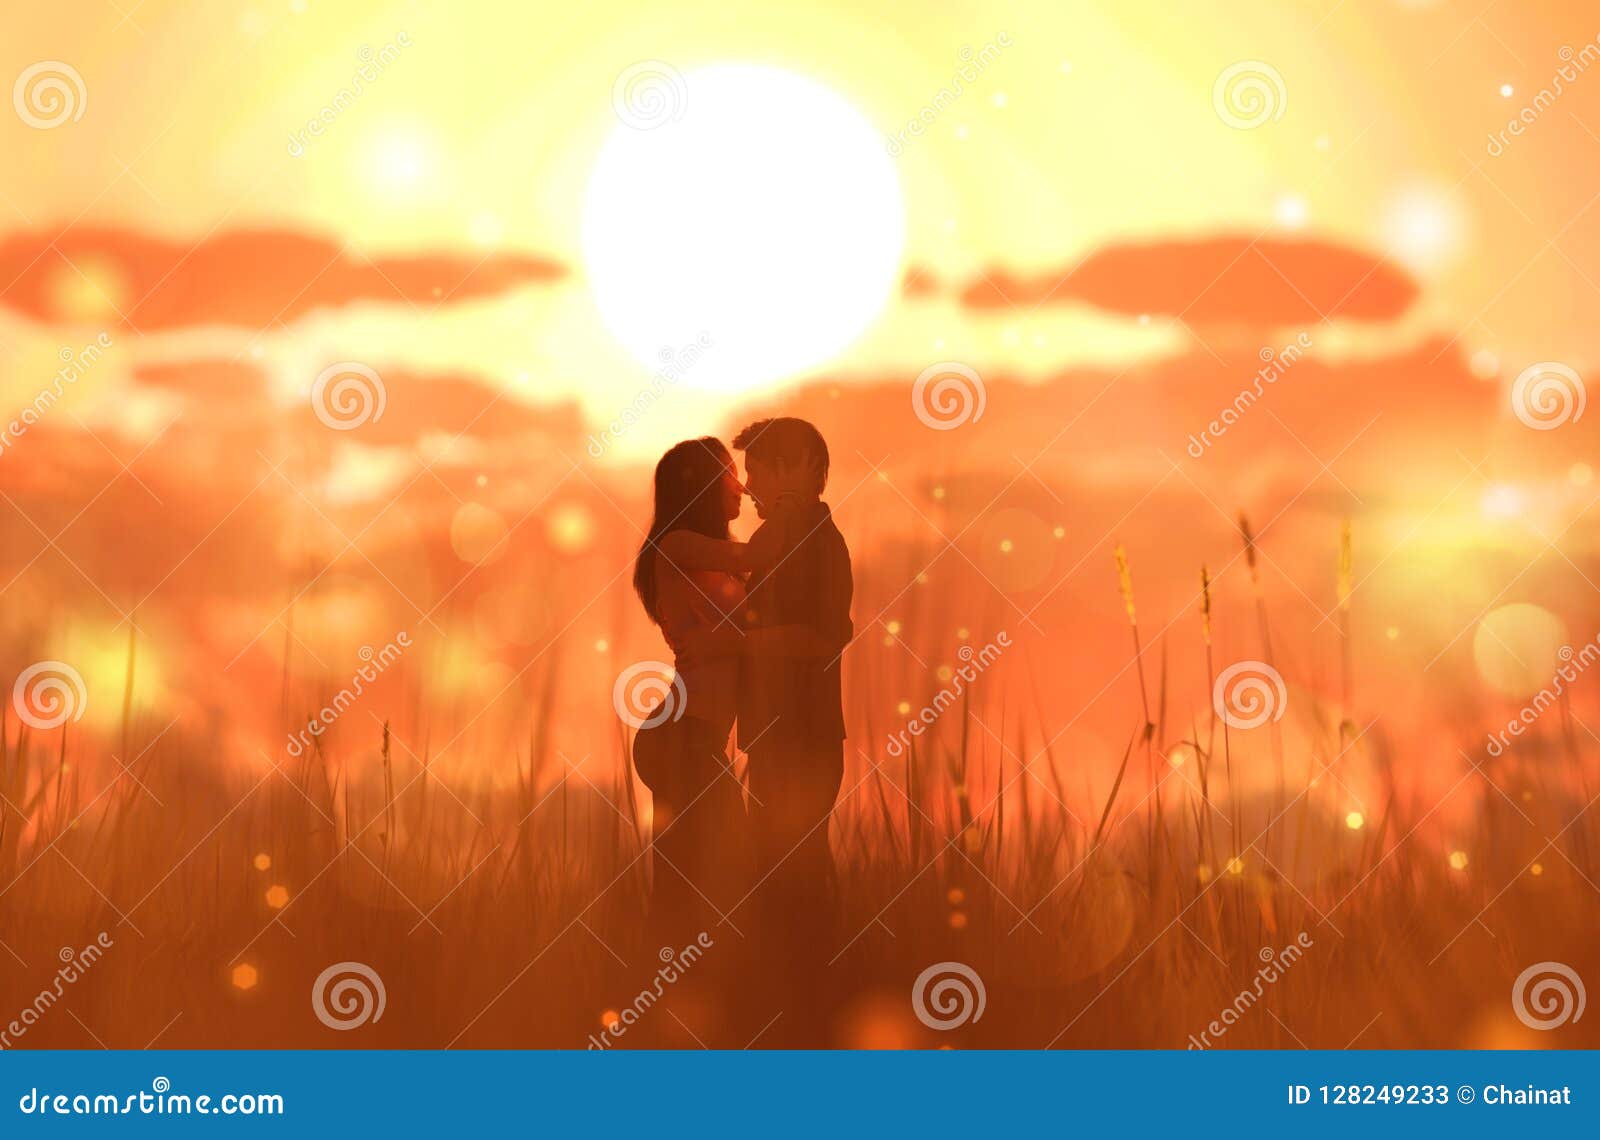 Romantic Couple in Grass Field Stock Illustration - Illustration of